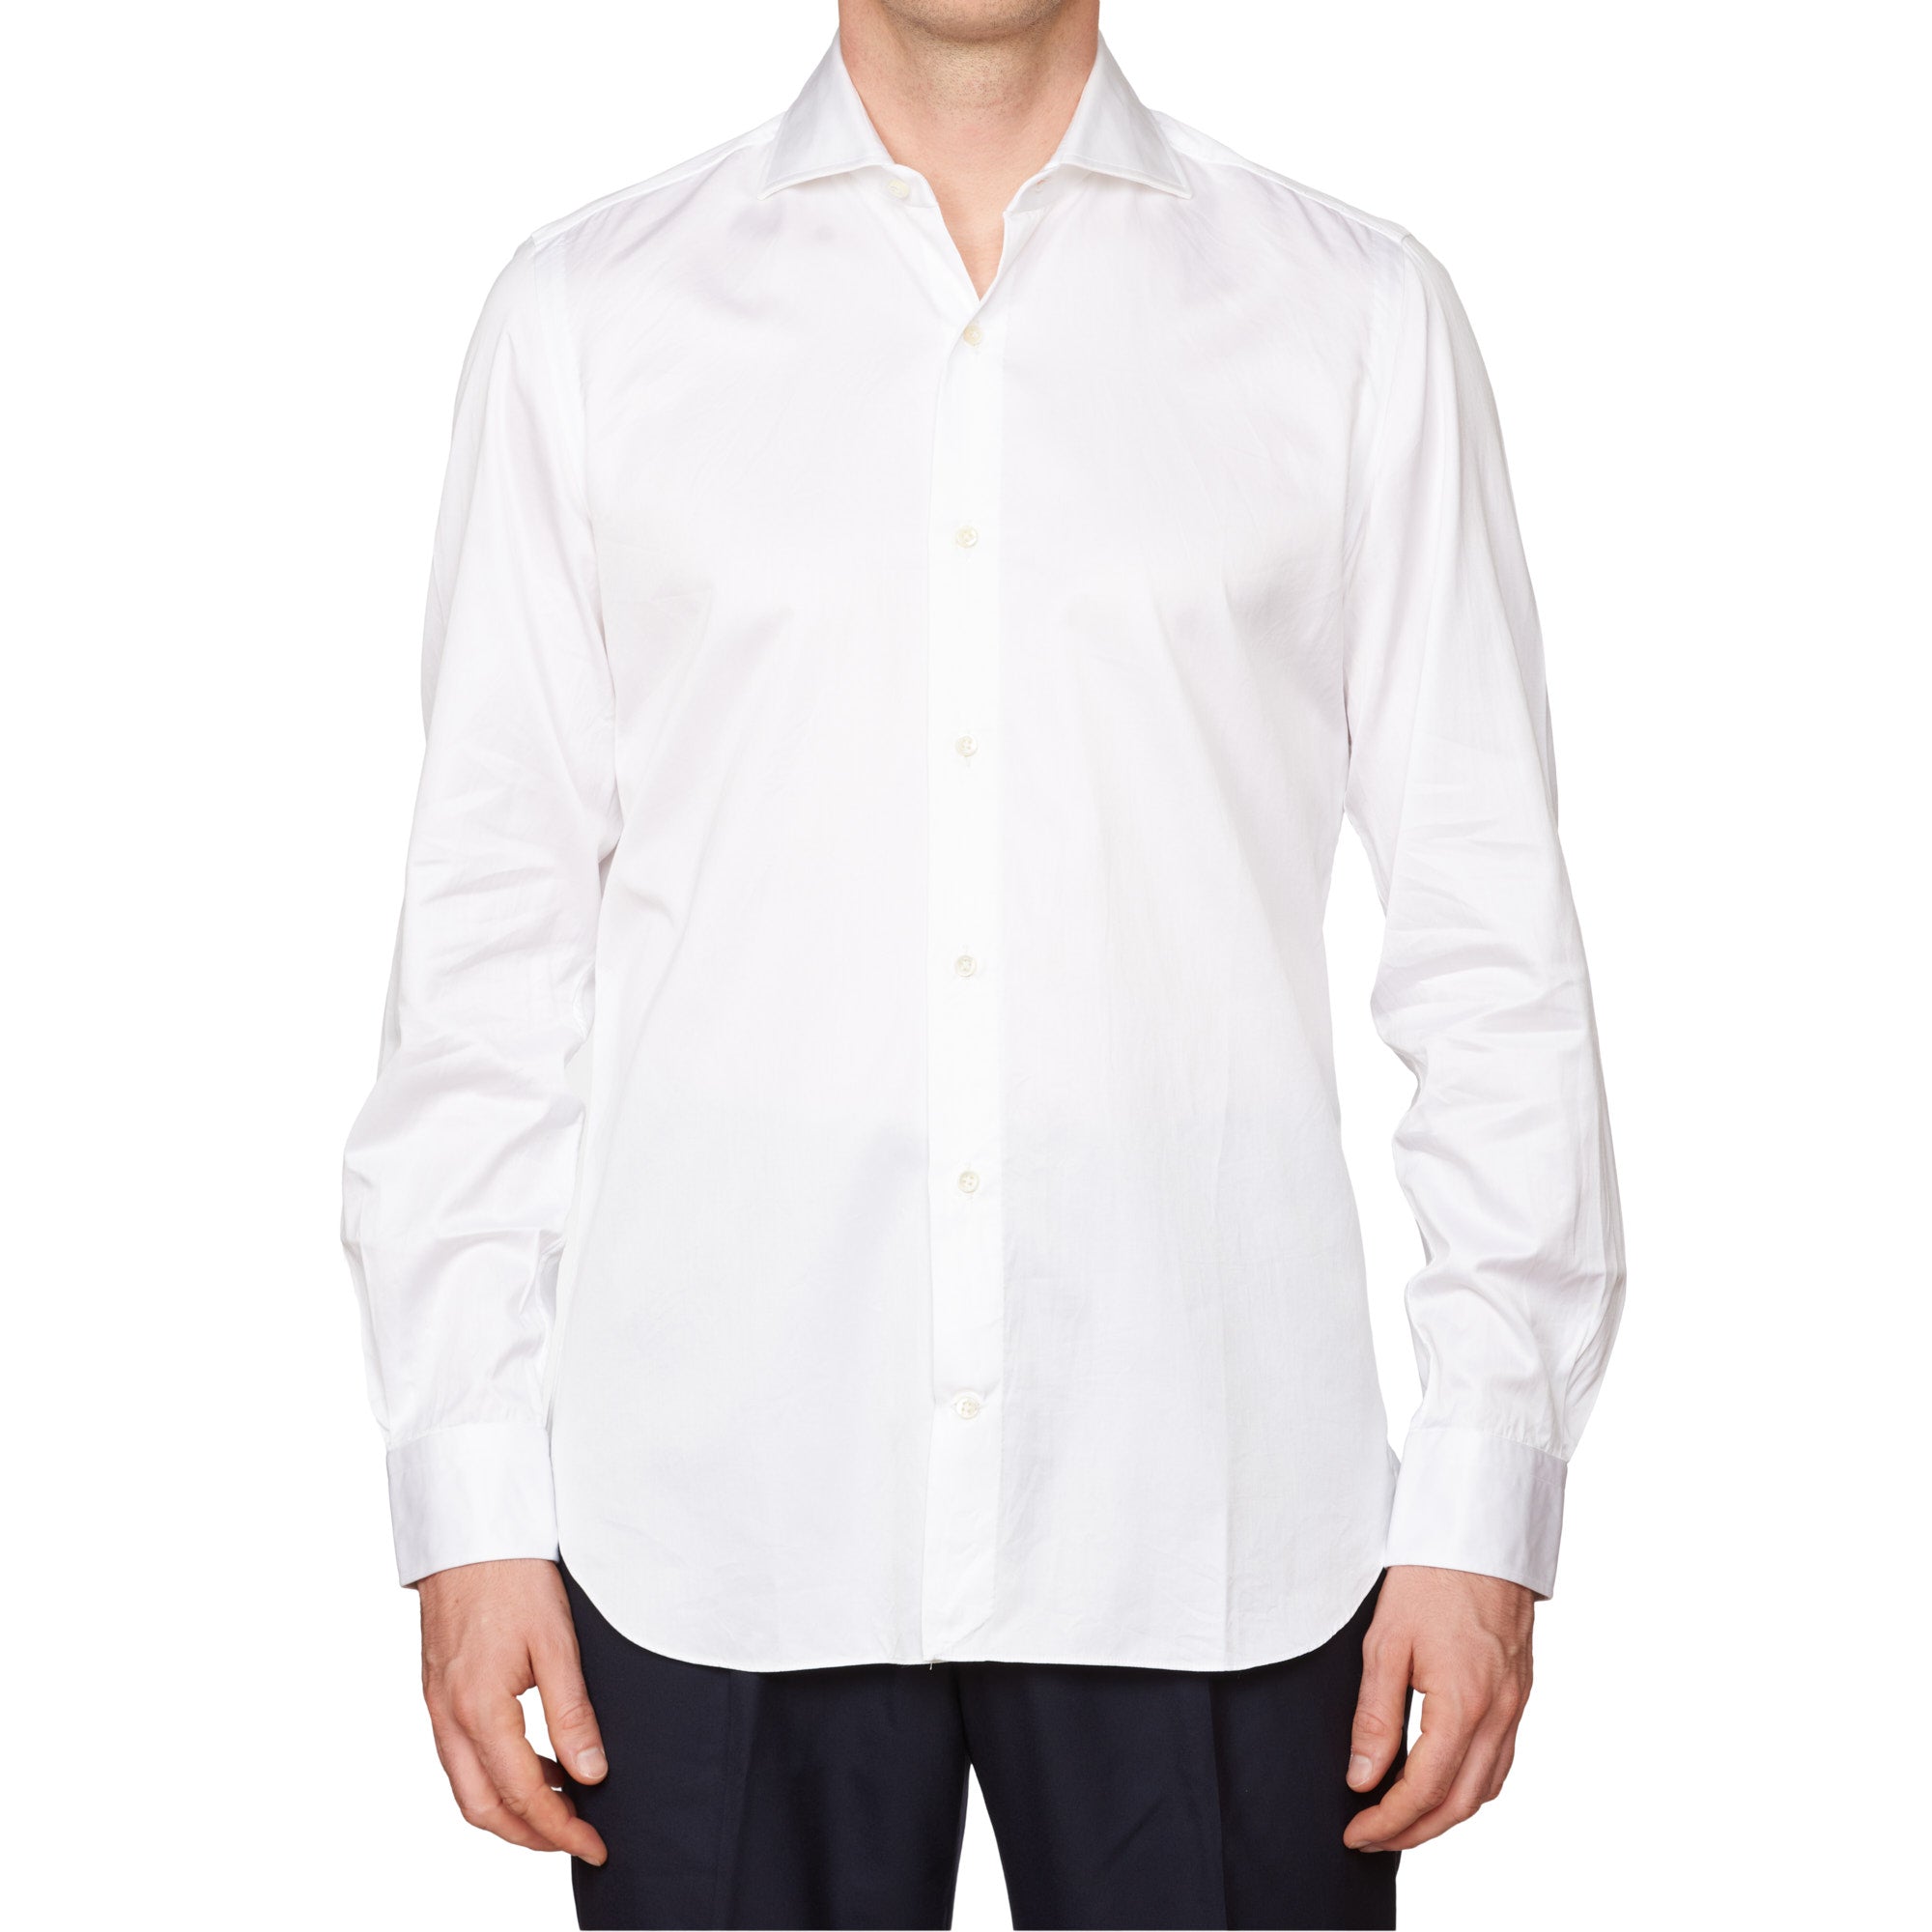 VINCENZO DI RUGGIERO Handmade Solid White Cotton Dress Shirt EU 40 US 15.75 Slim Fit